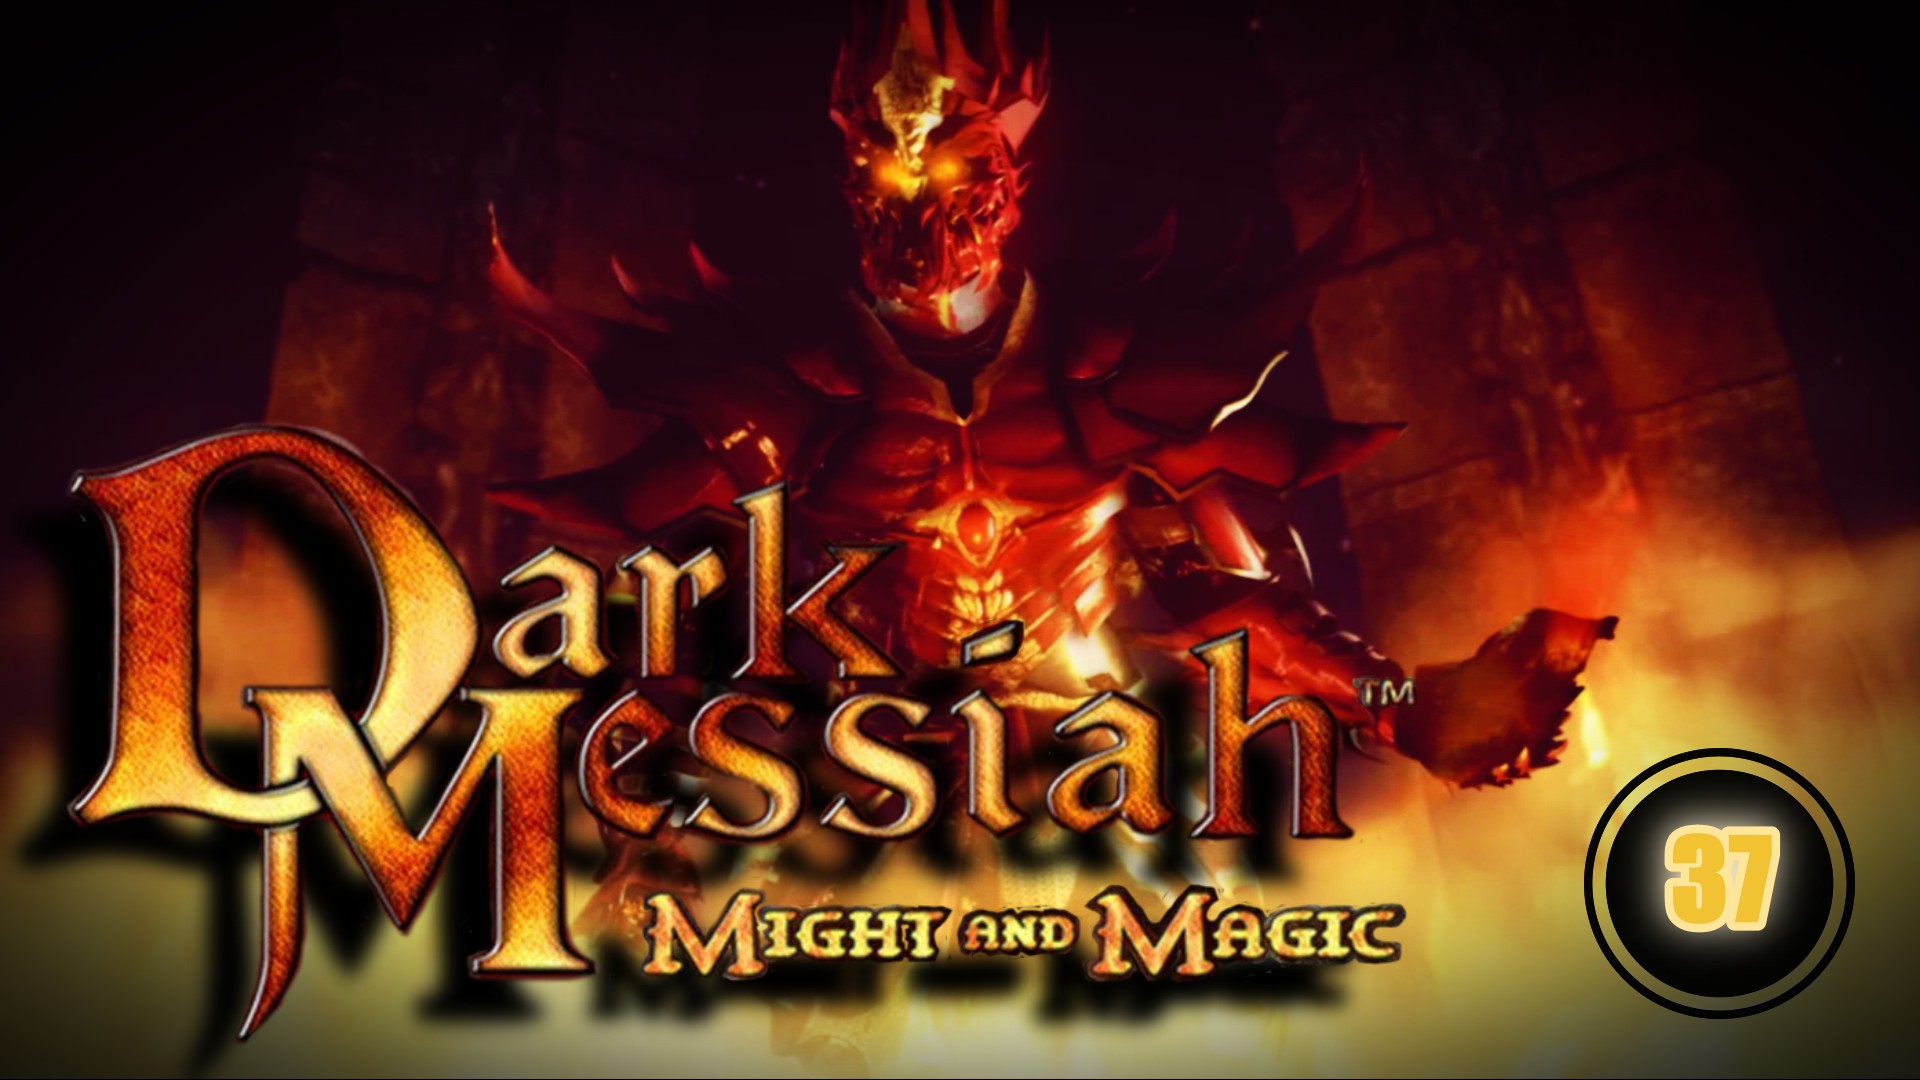 Dark Messiah of Might and Magic 37